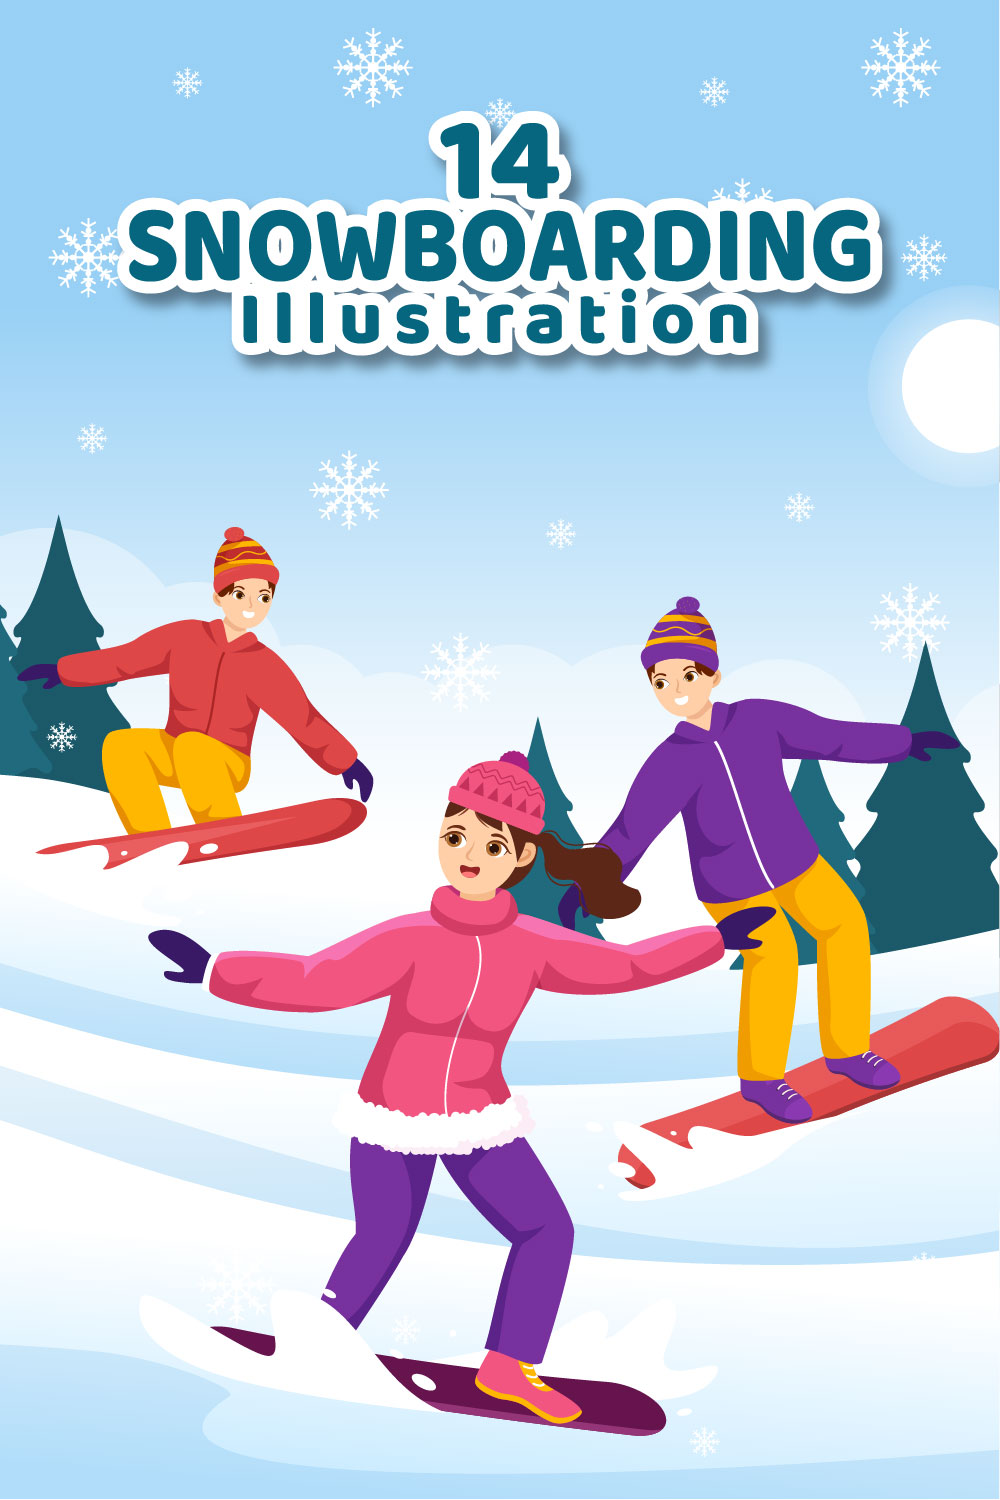 Snowboarding Graphics Design pinterest image.